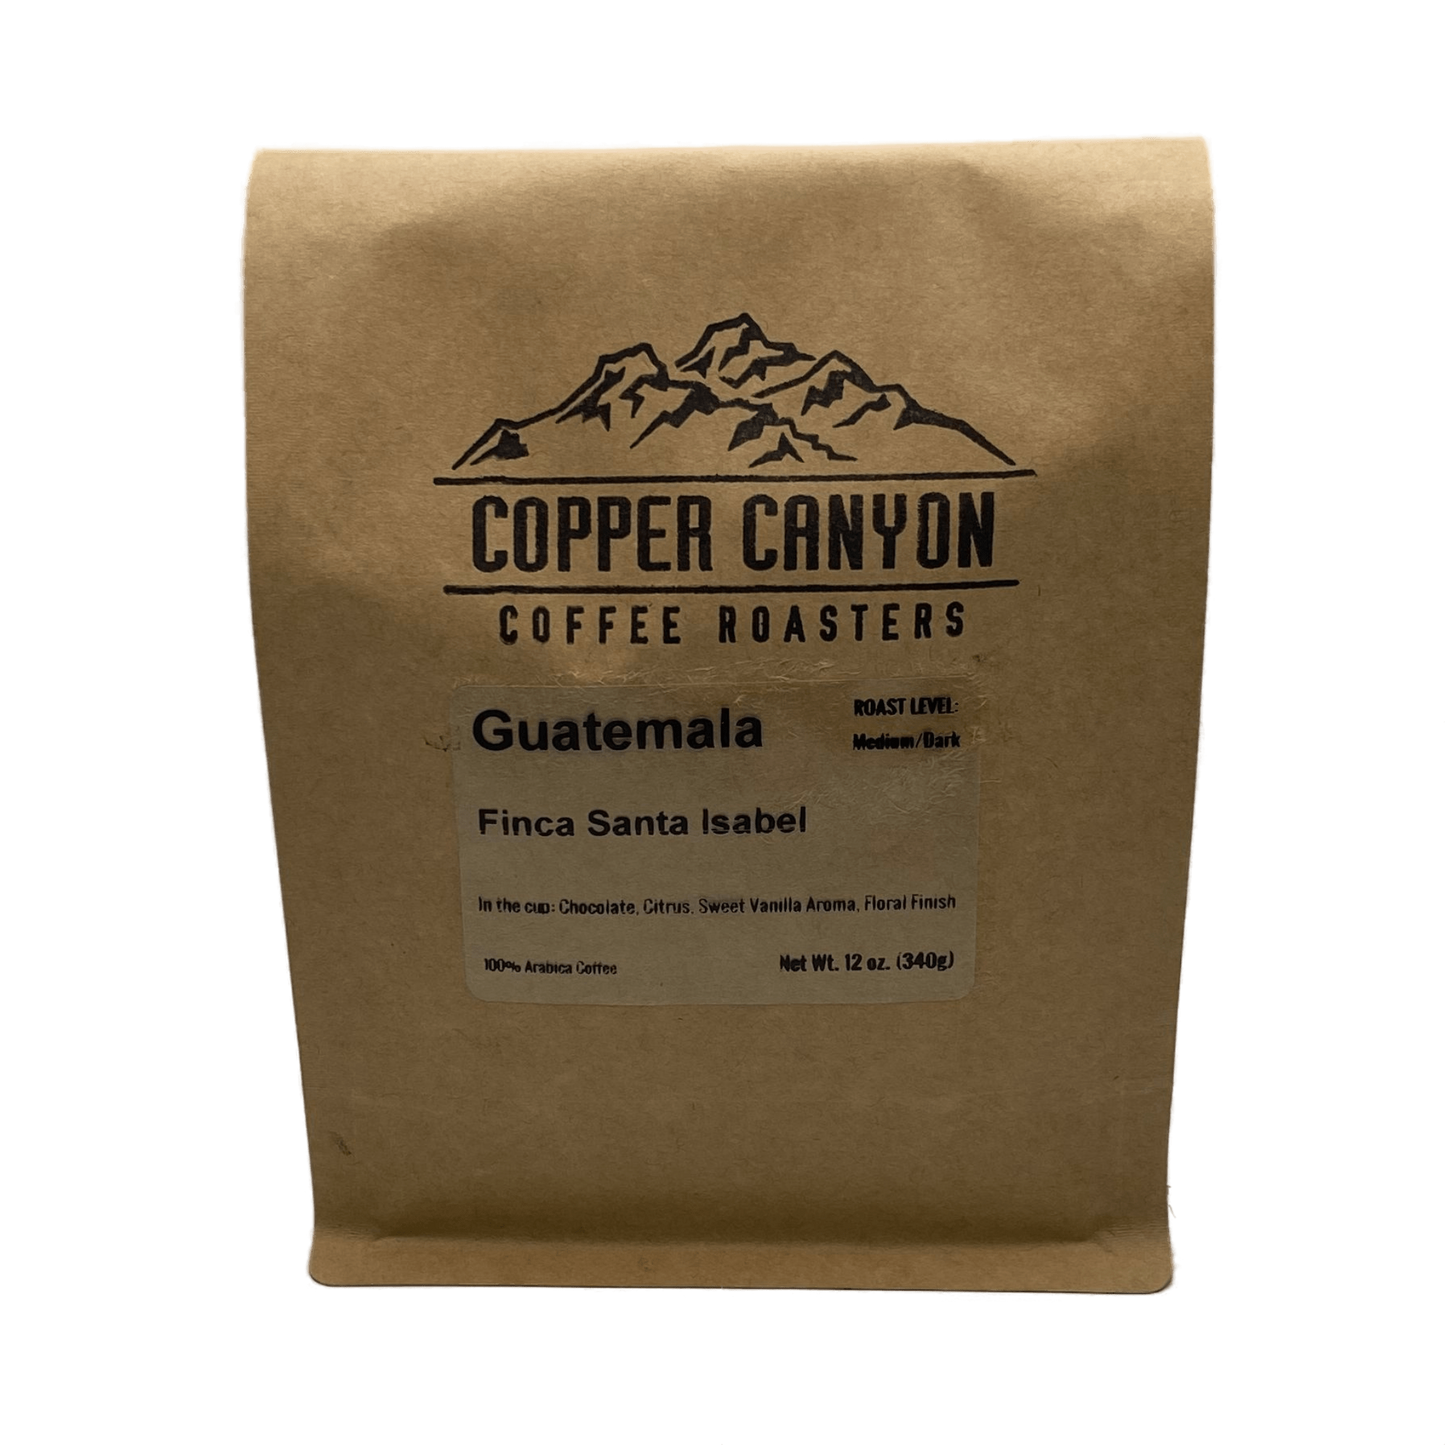 12 oz bag of Guatemala, single origin, medium roast coffee